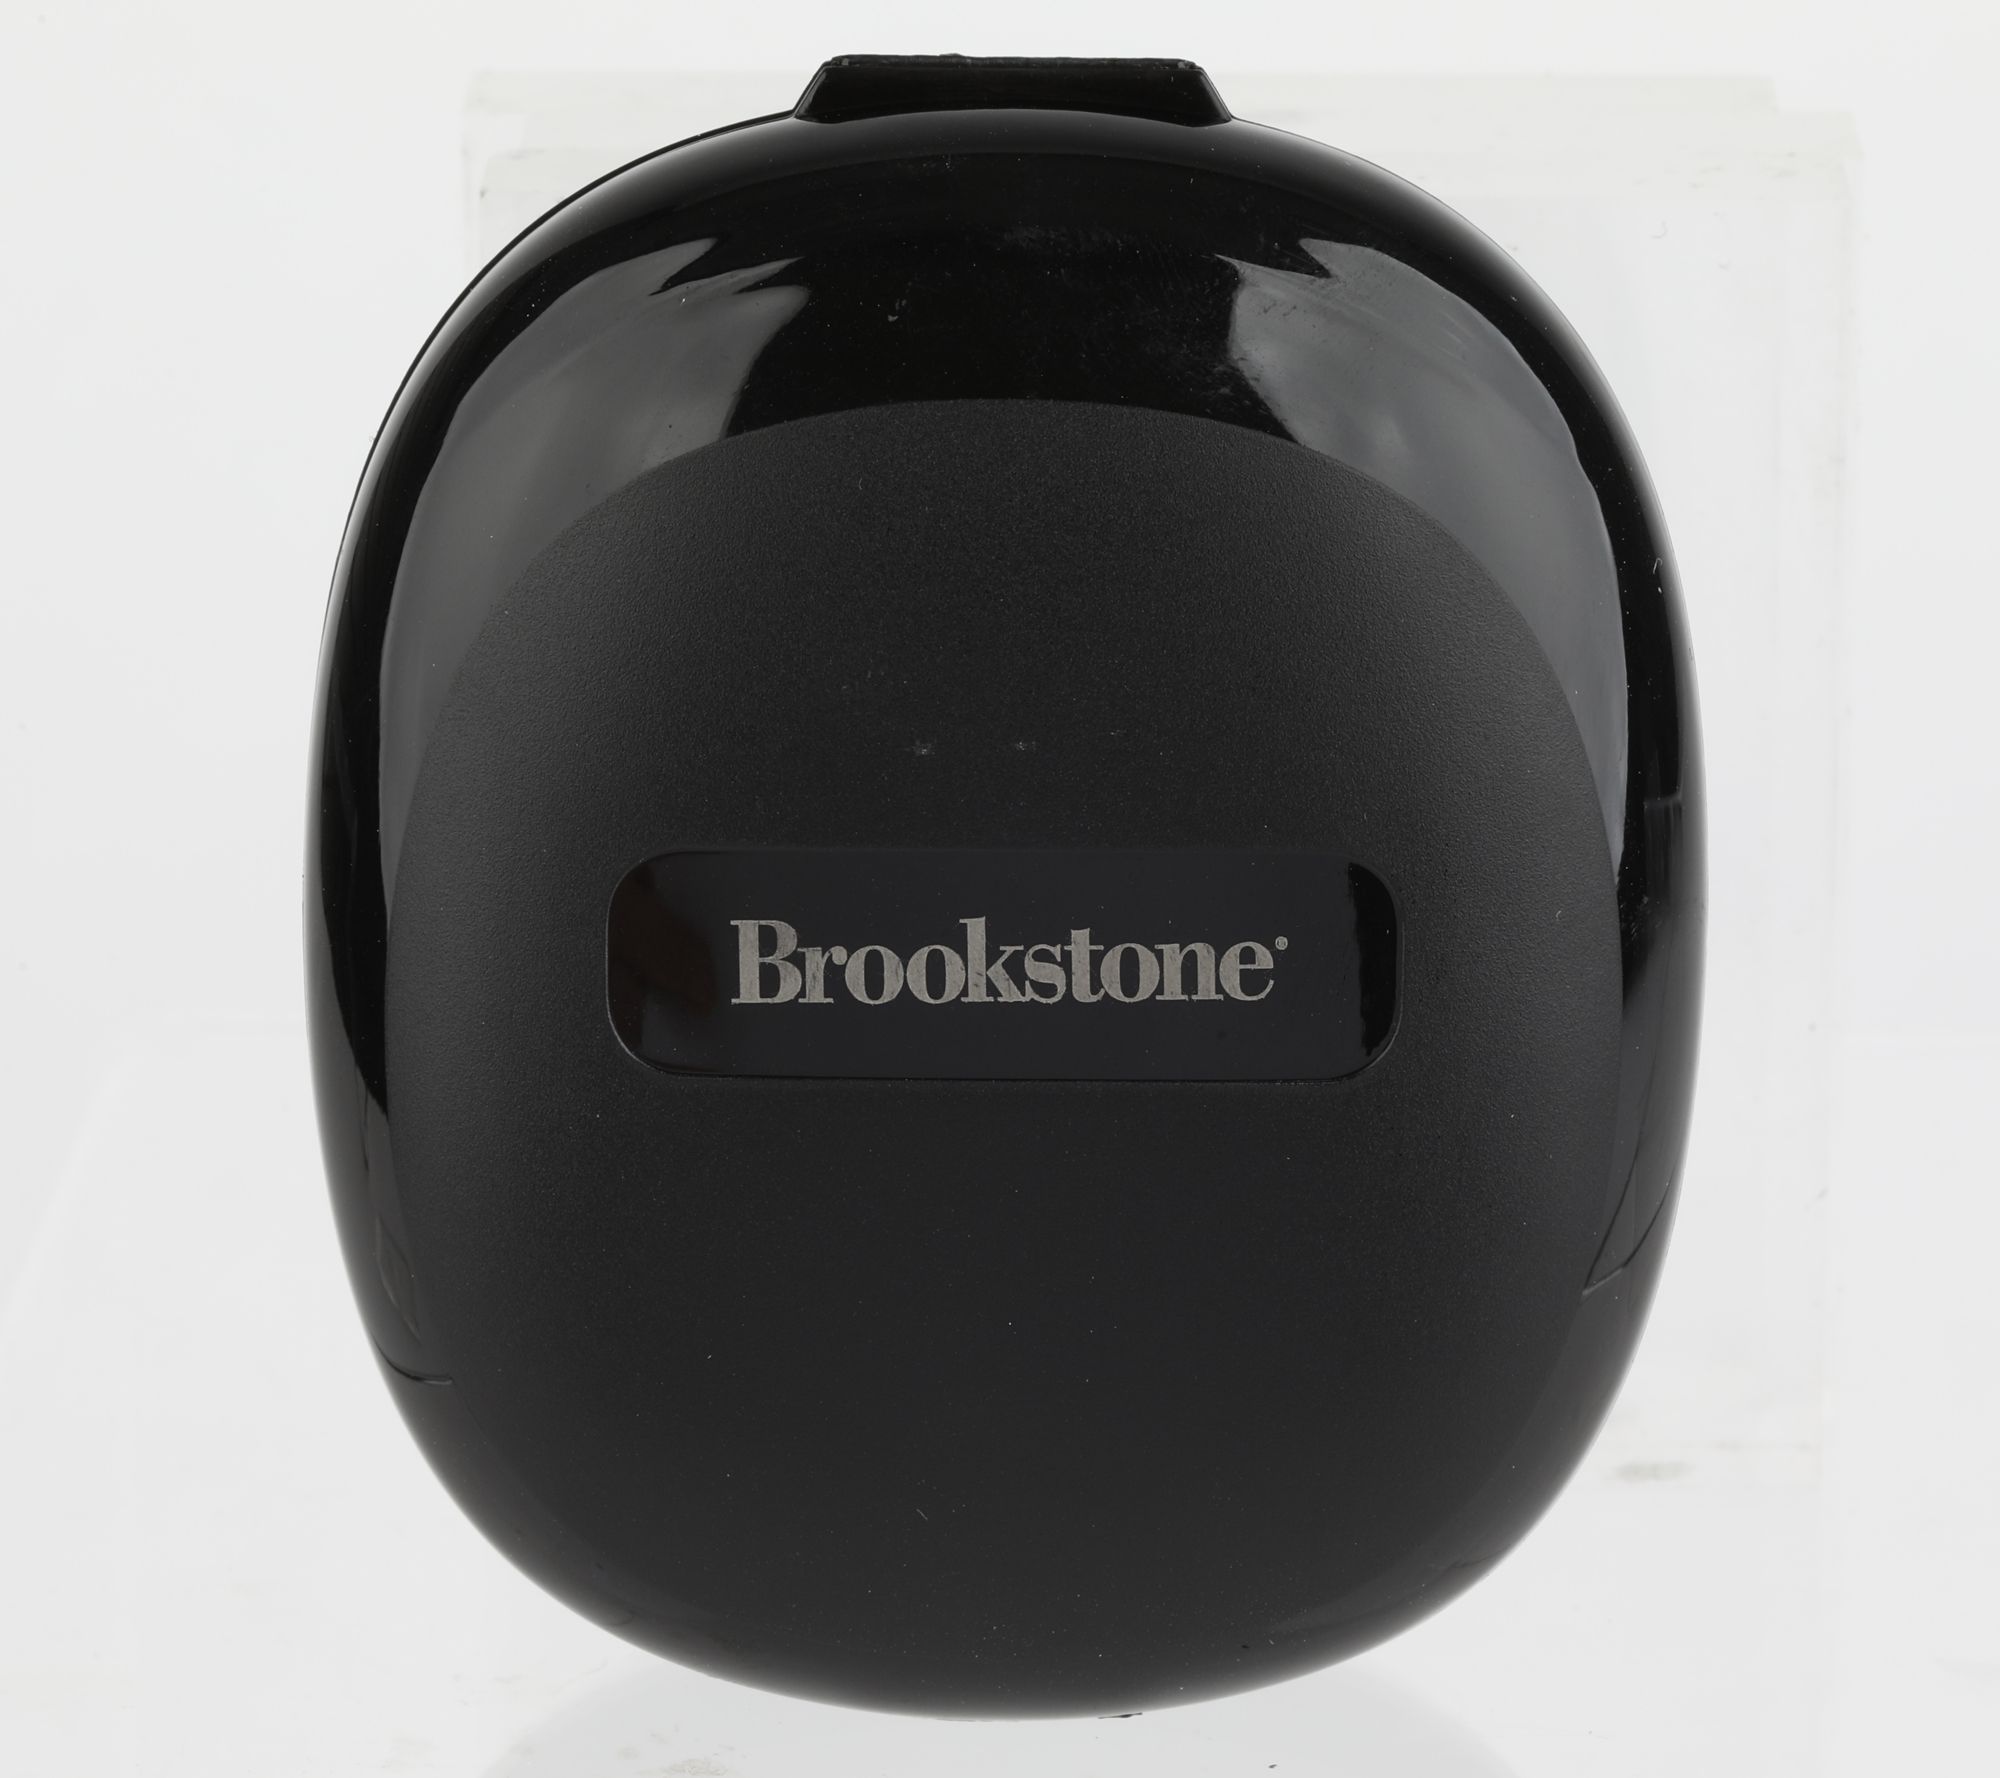 Brookstone i-need handheld heated massager